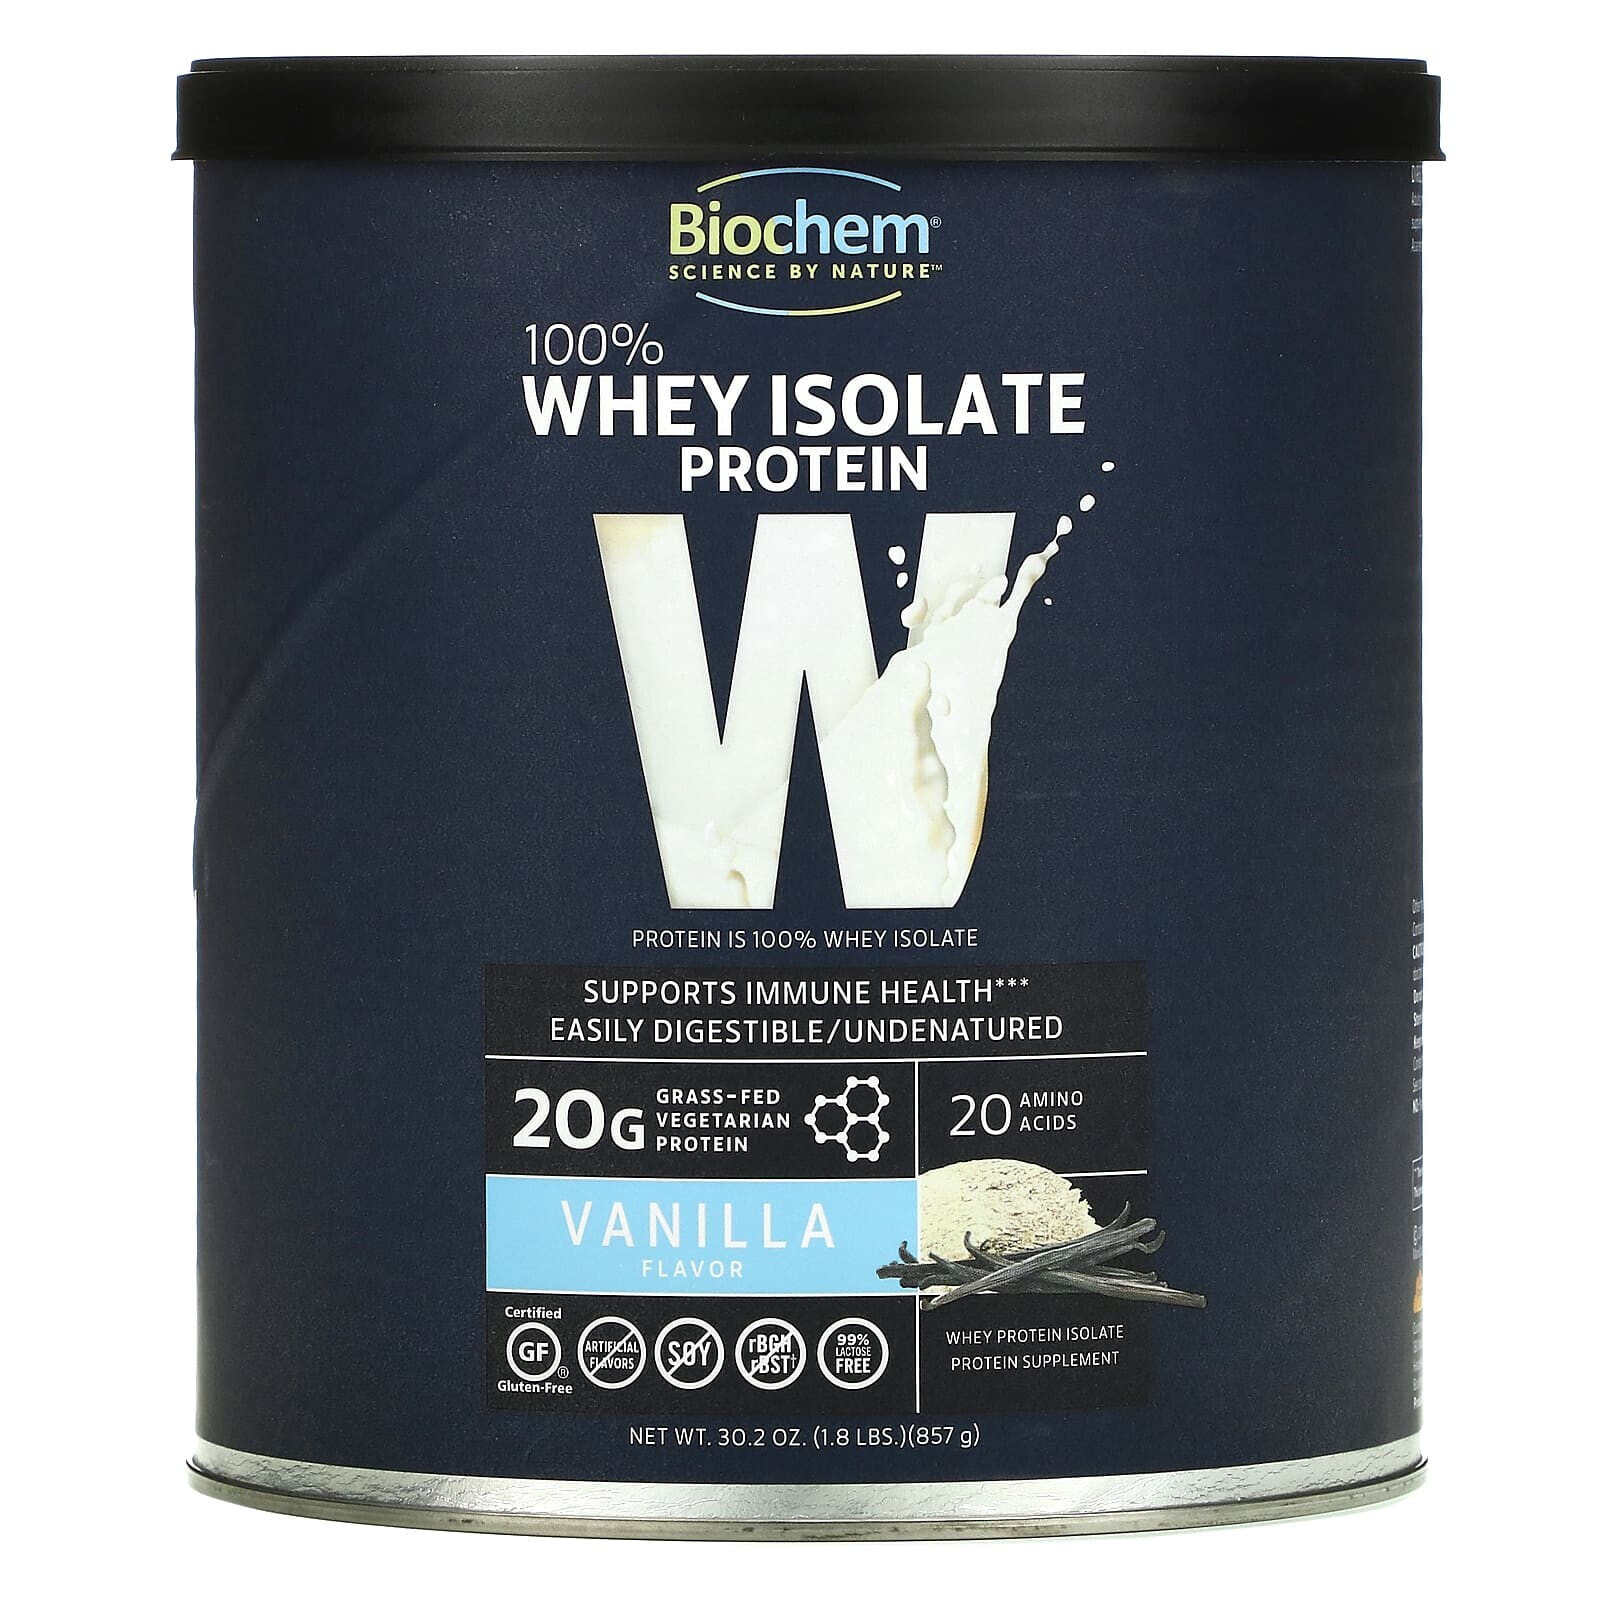 100% Whey Isolate Protein Powder, Vanilla, 1.8 lbs (857 g)